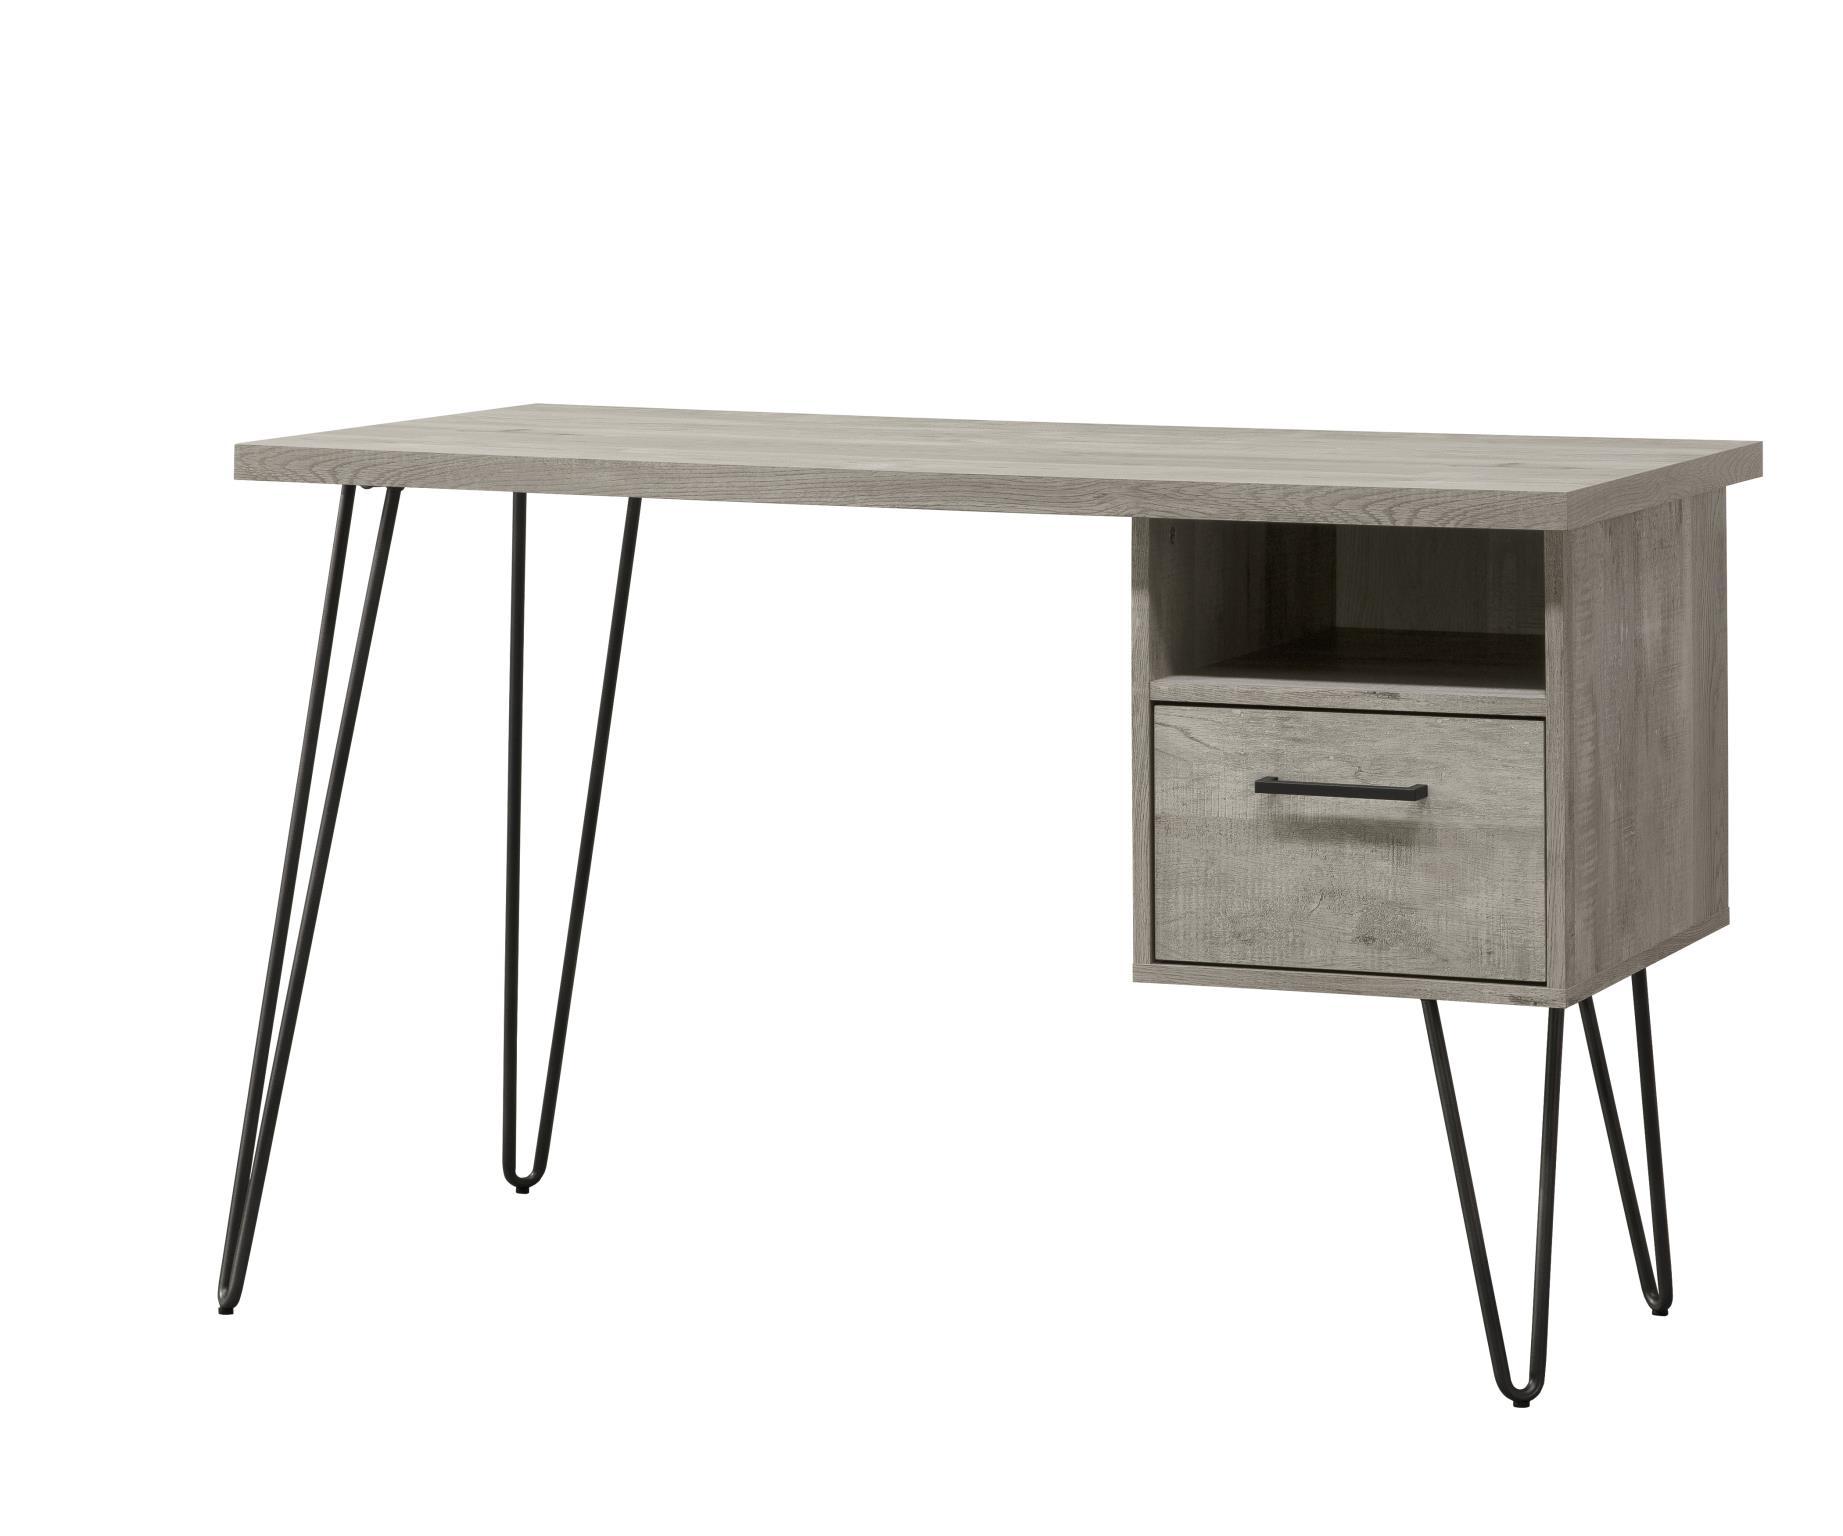 Modern, Transitional Home Office Desk HENLEY 400-715 400-715 in Gray 